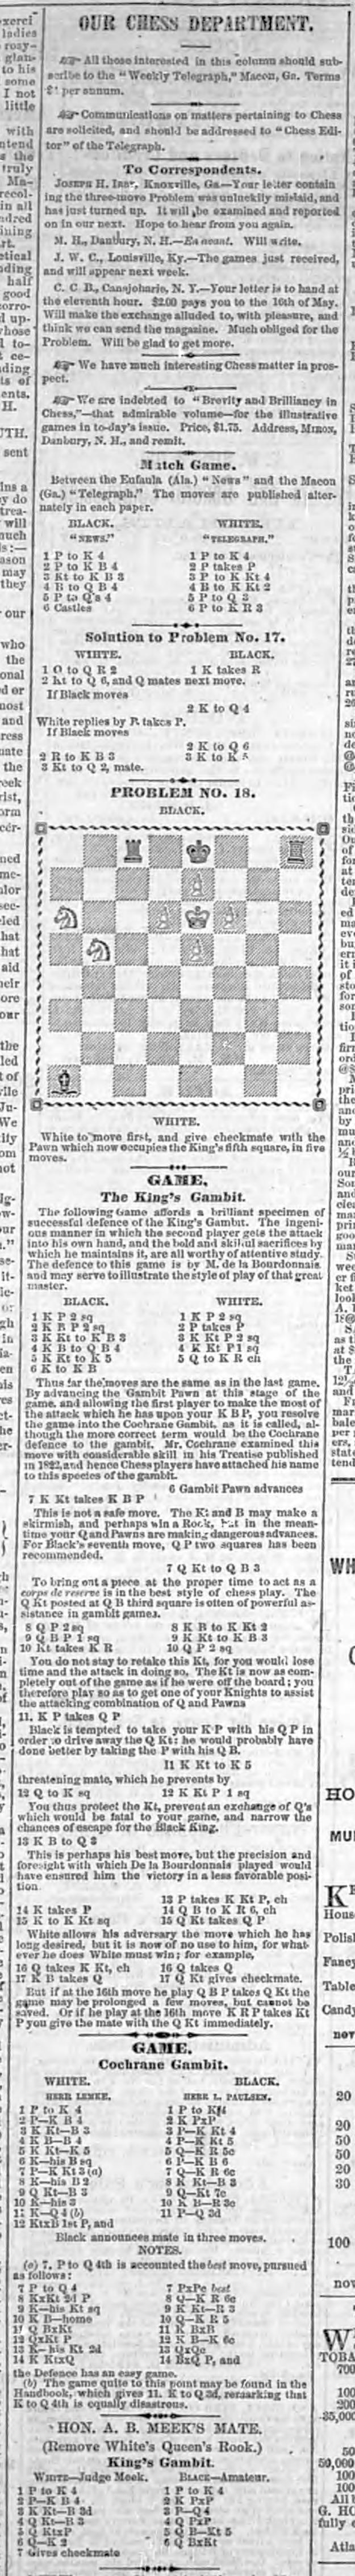 1866.11.19-01 Macon Georgia Weekly Telegraph.jpg